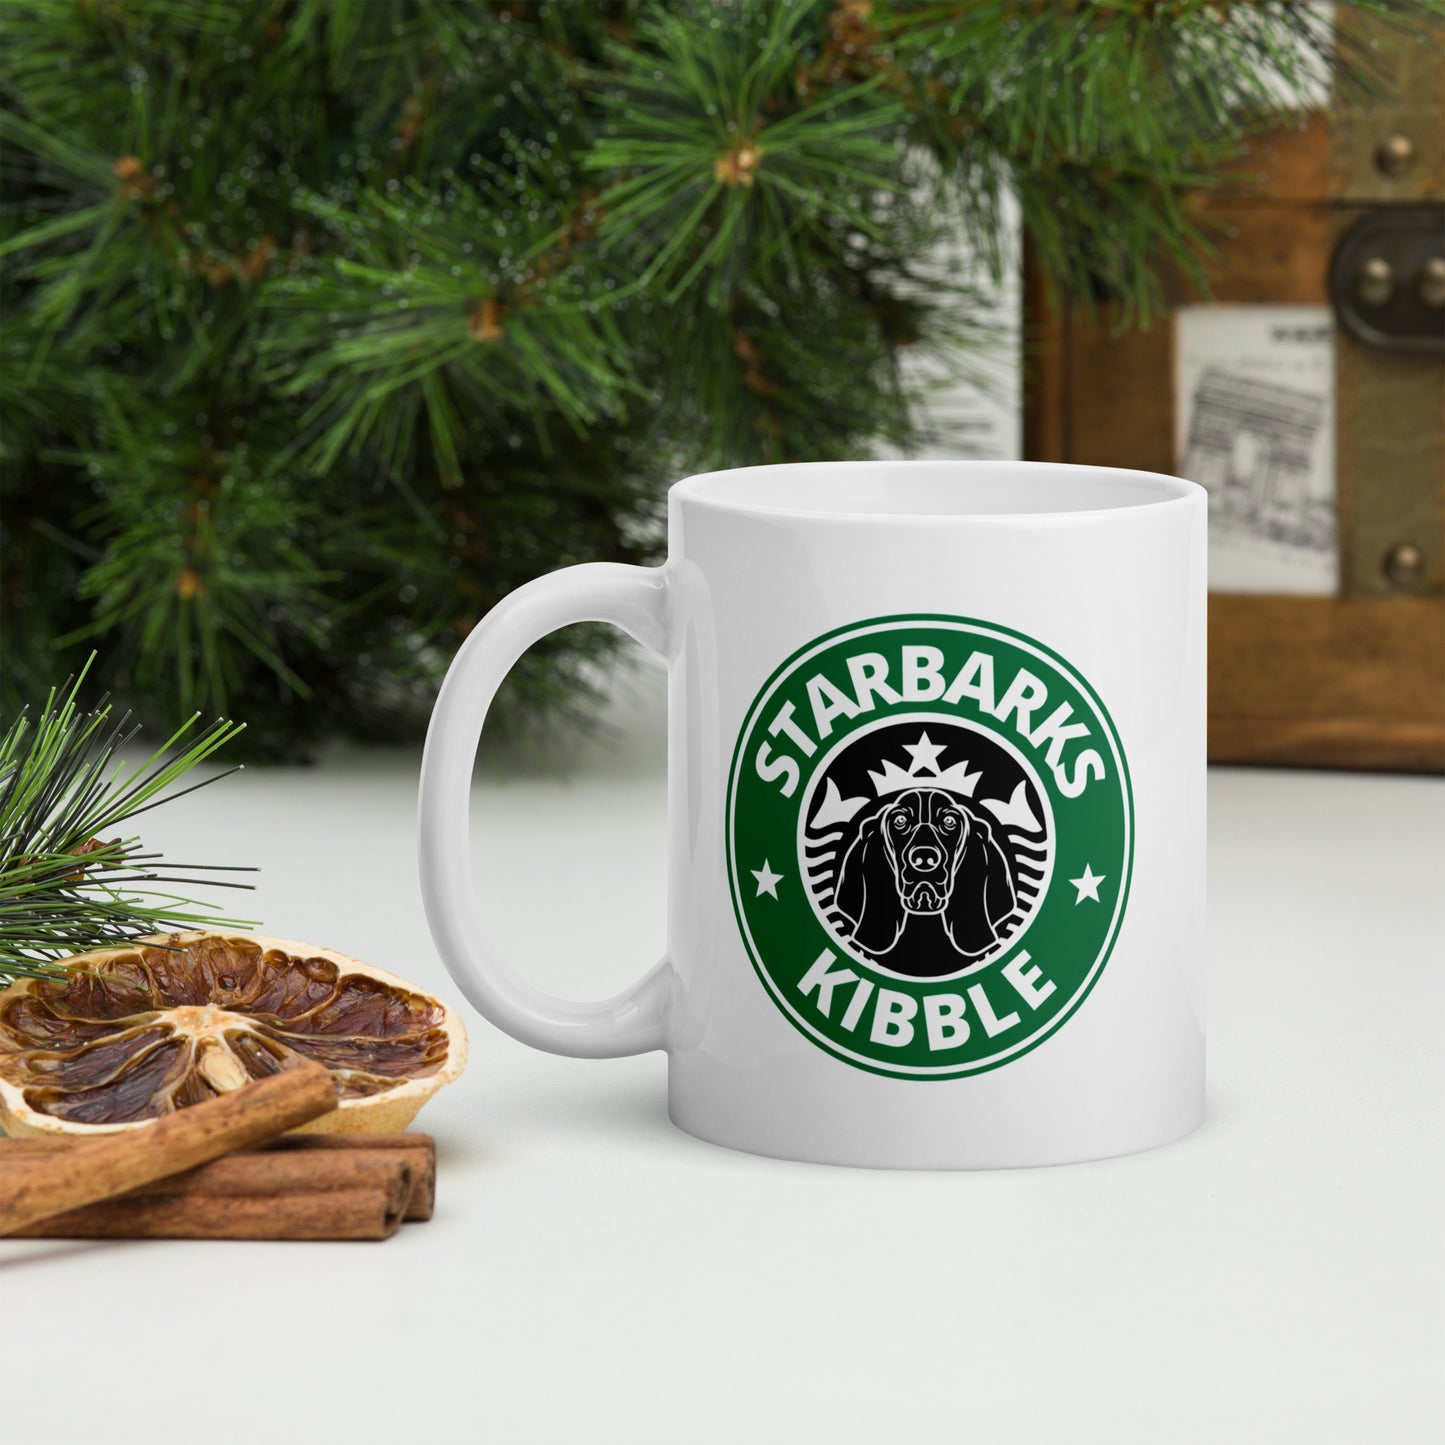 Starbarks Coffee Mug